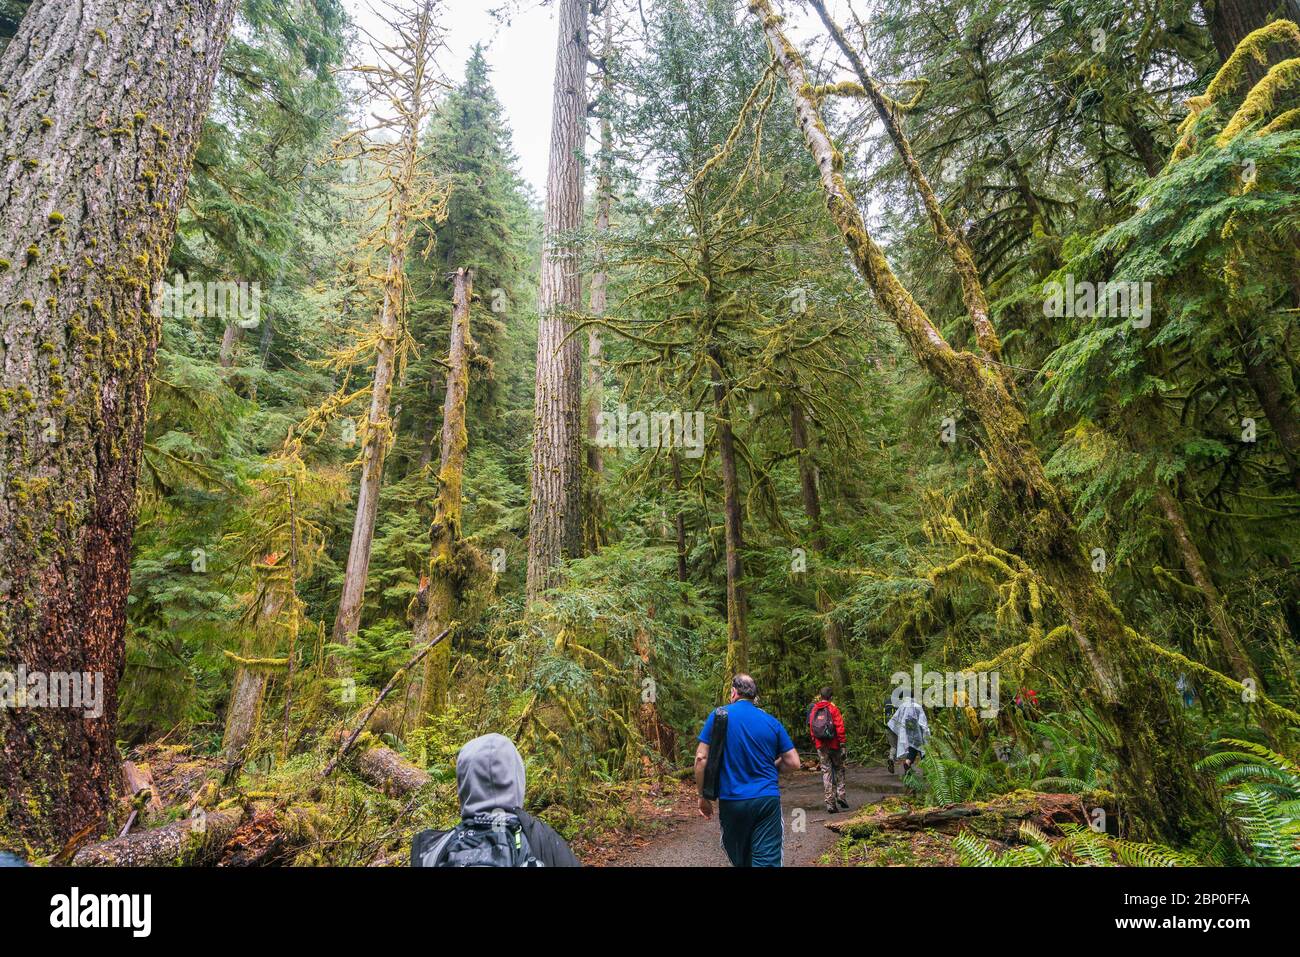 plenty forest in Olympic national park area,Washington,usa. Stock Photo